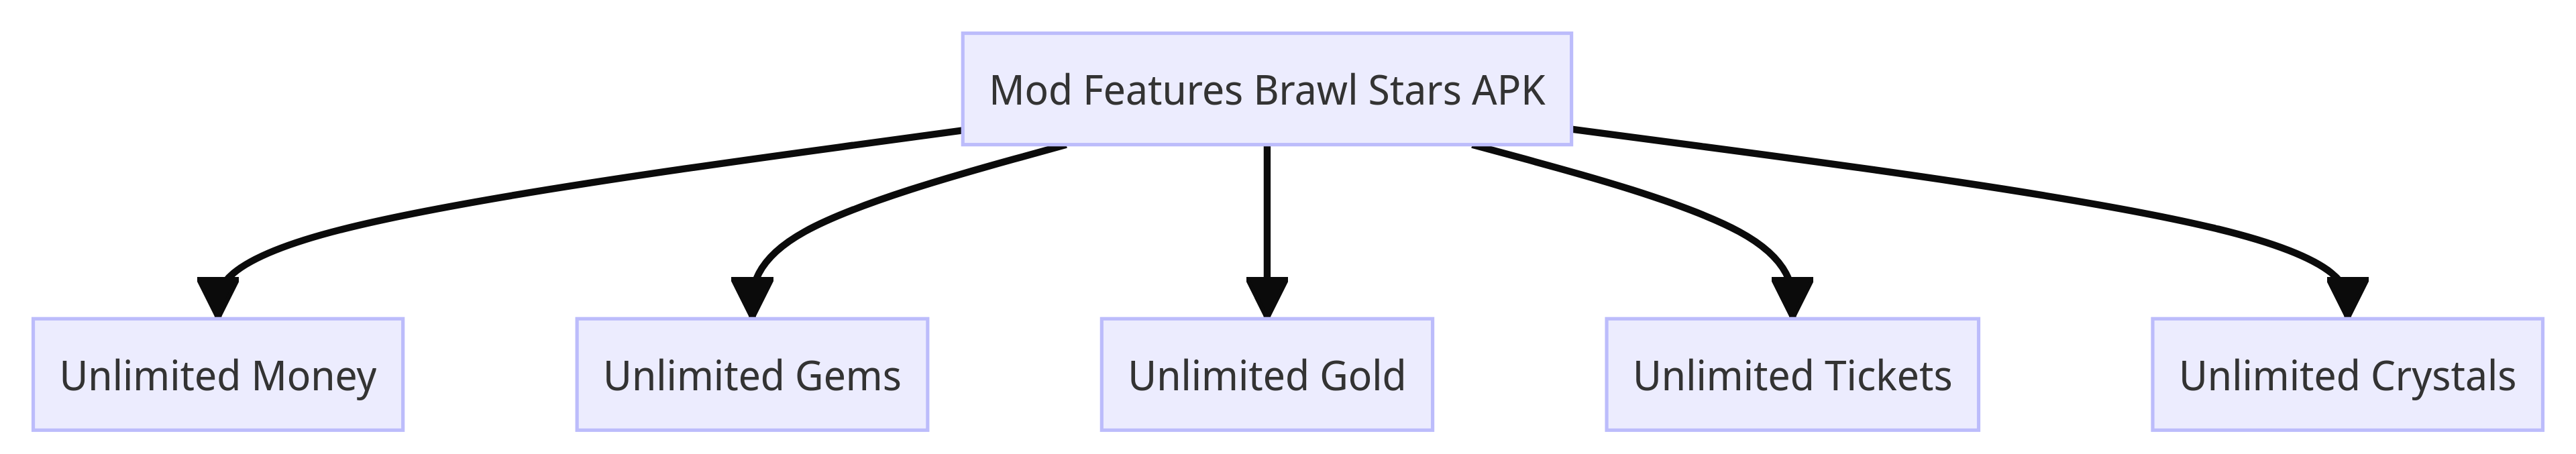 Mod Features Brawl Stars APK